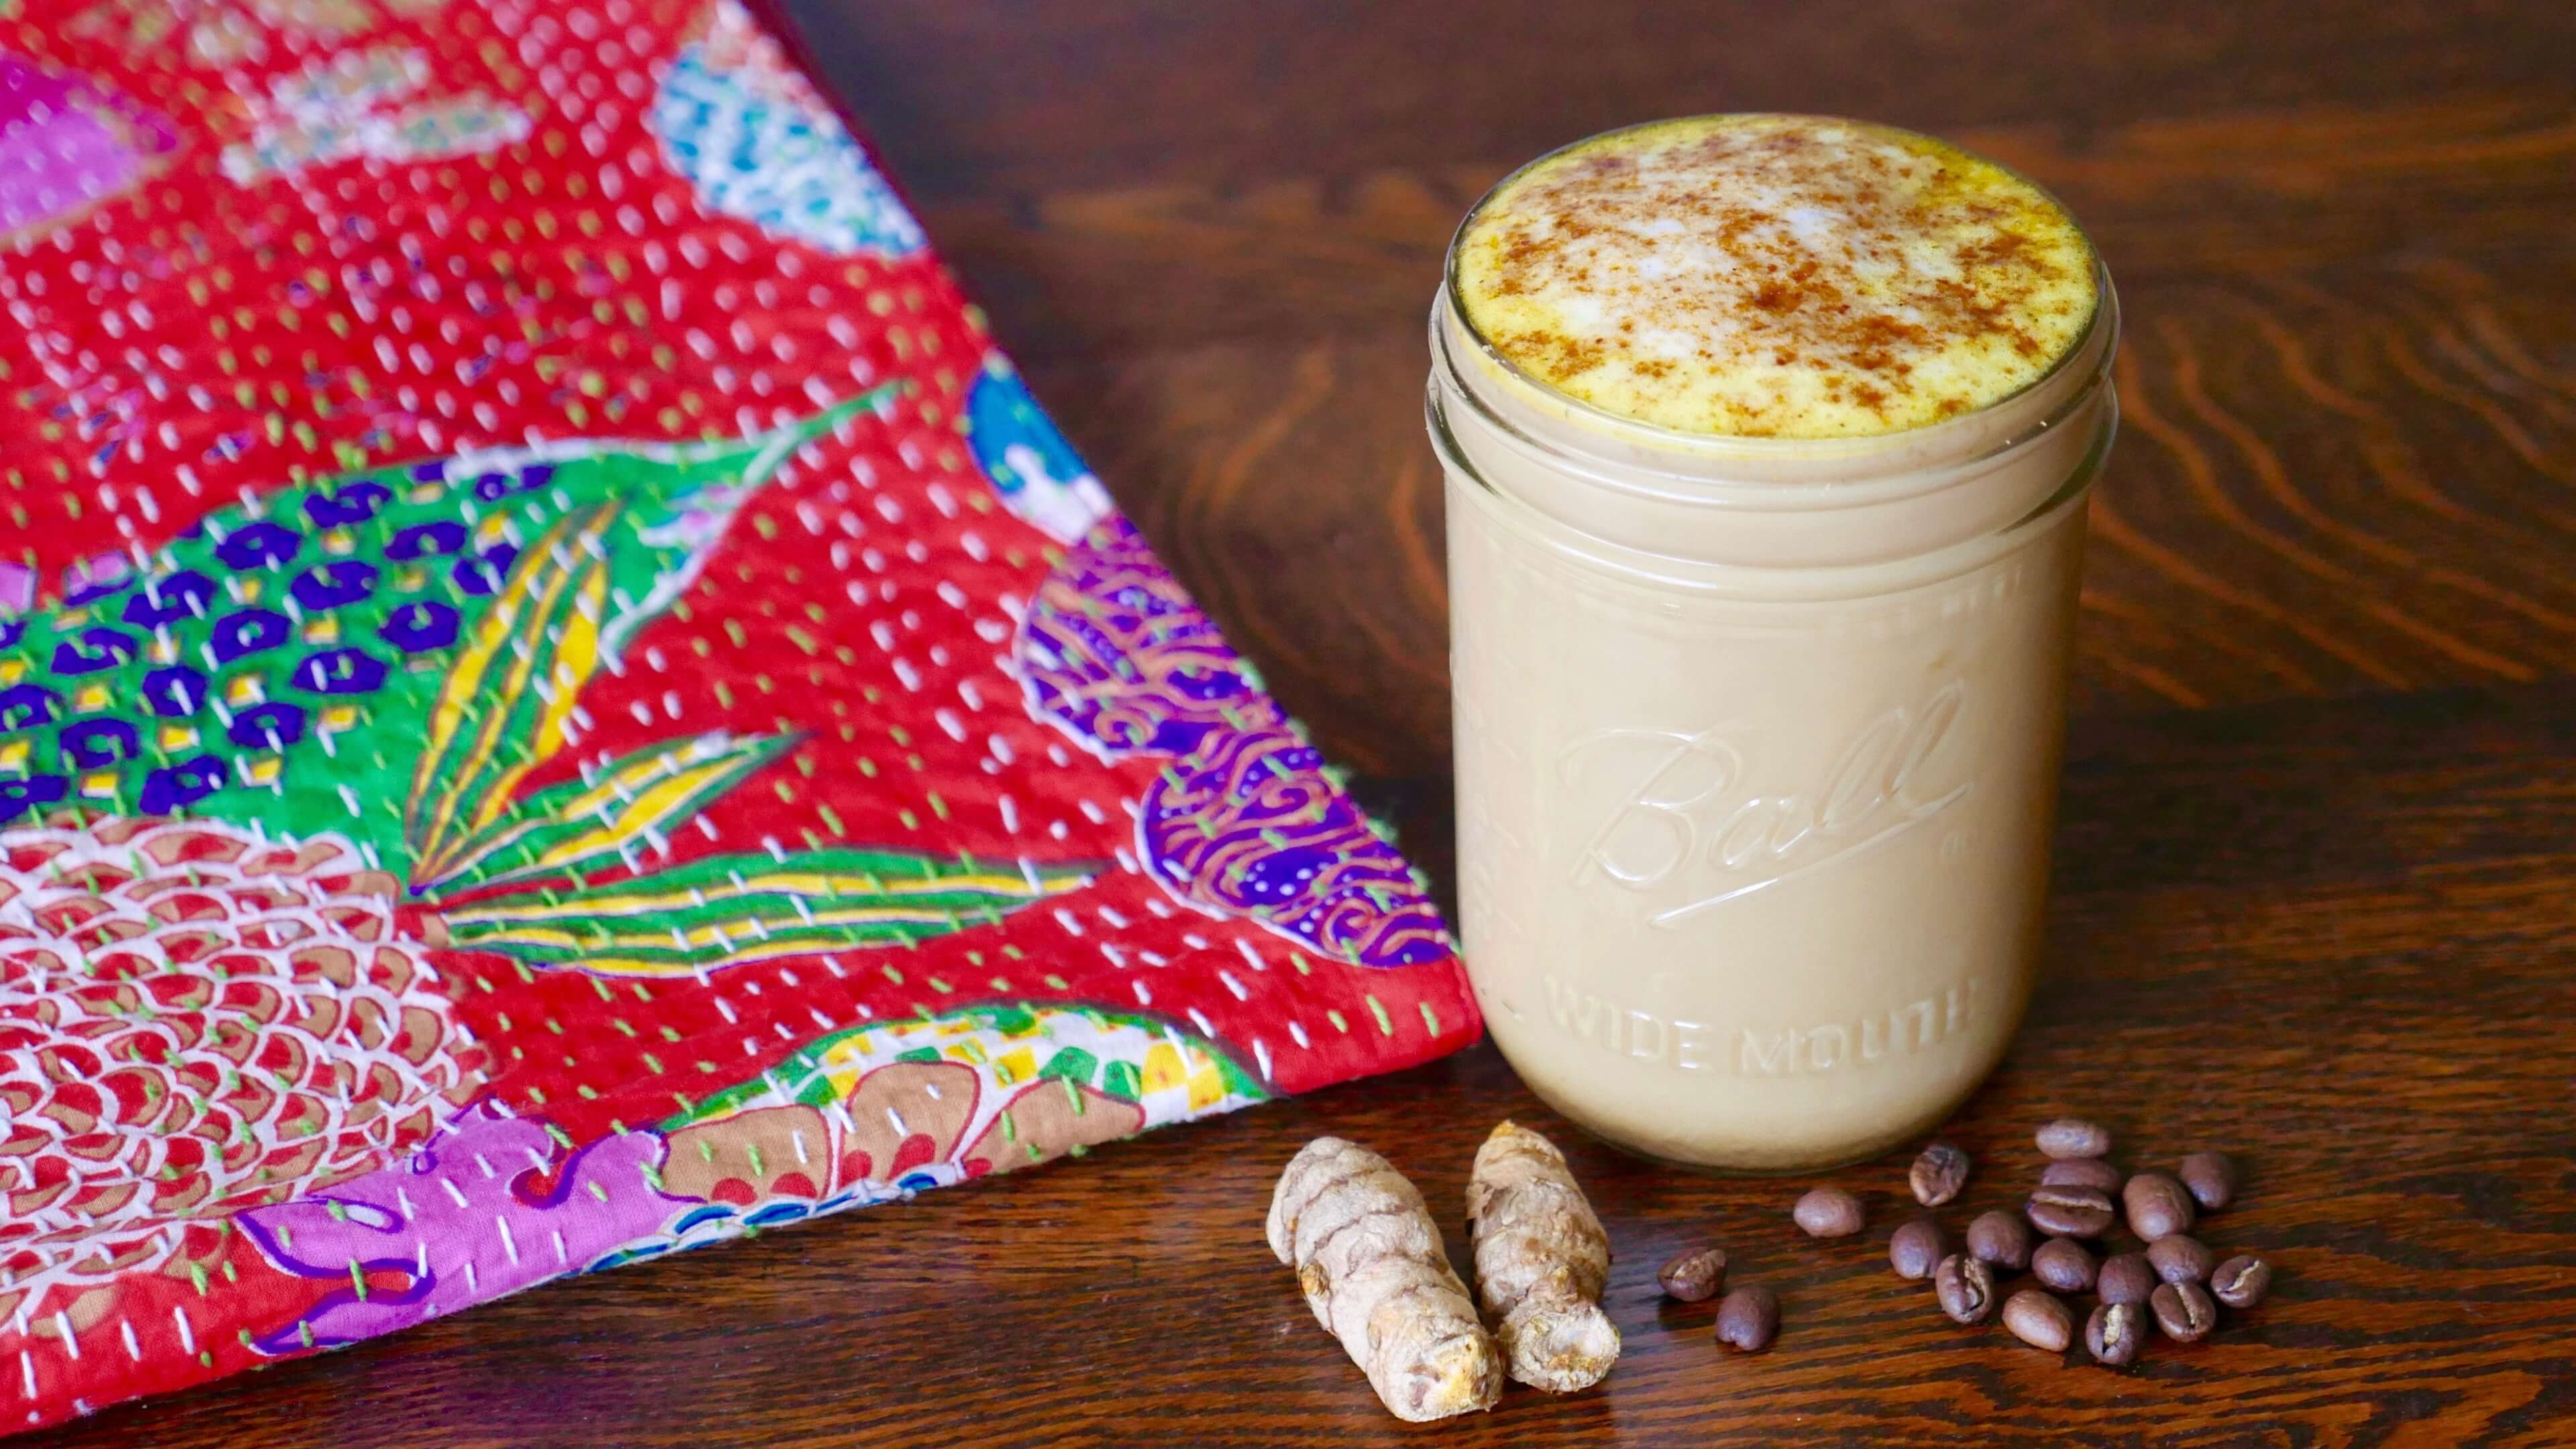 https://www.mamanatural.com/wp-content/uploads/Easy-turmeric-golden-milk-latte-recipe-by-Mama-Natural.jpg